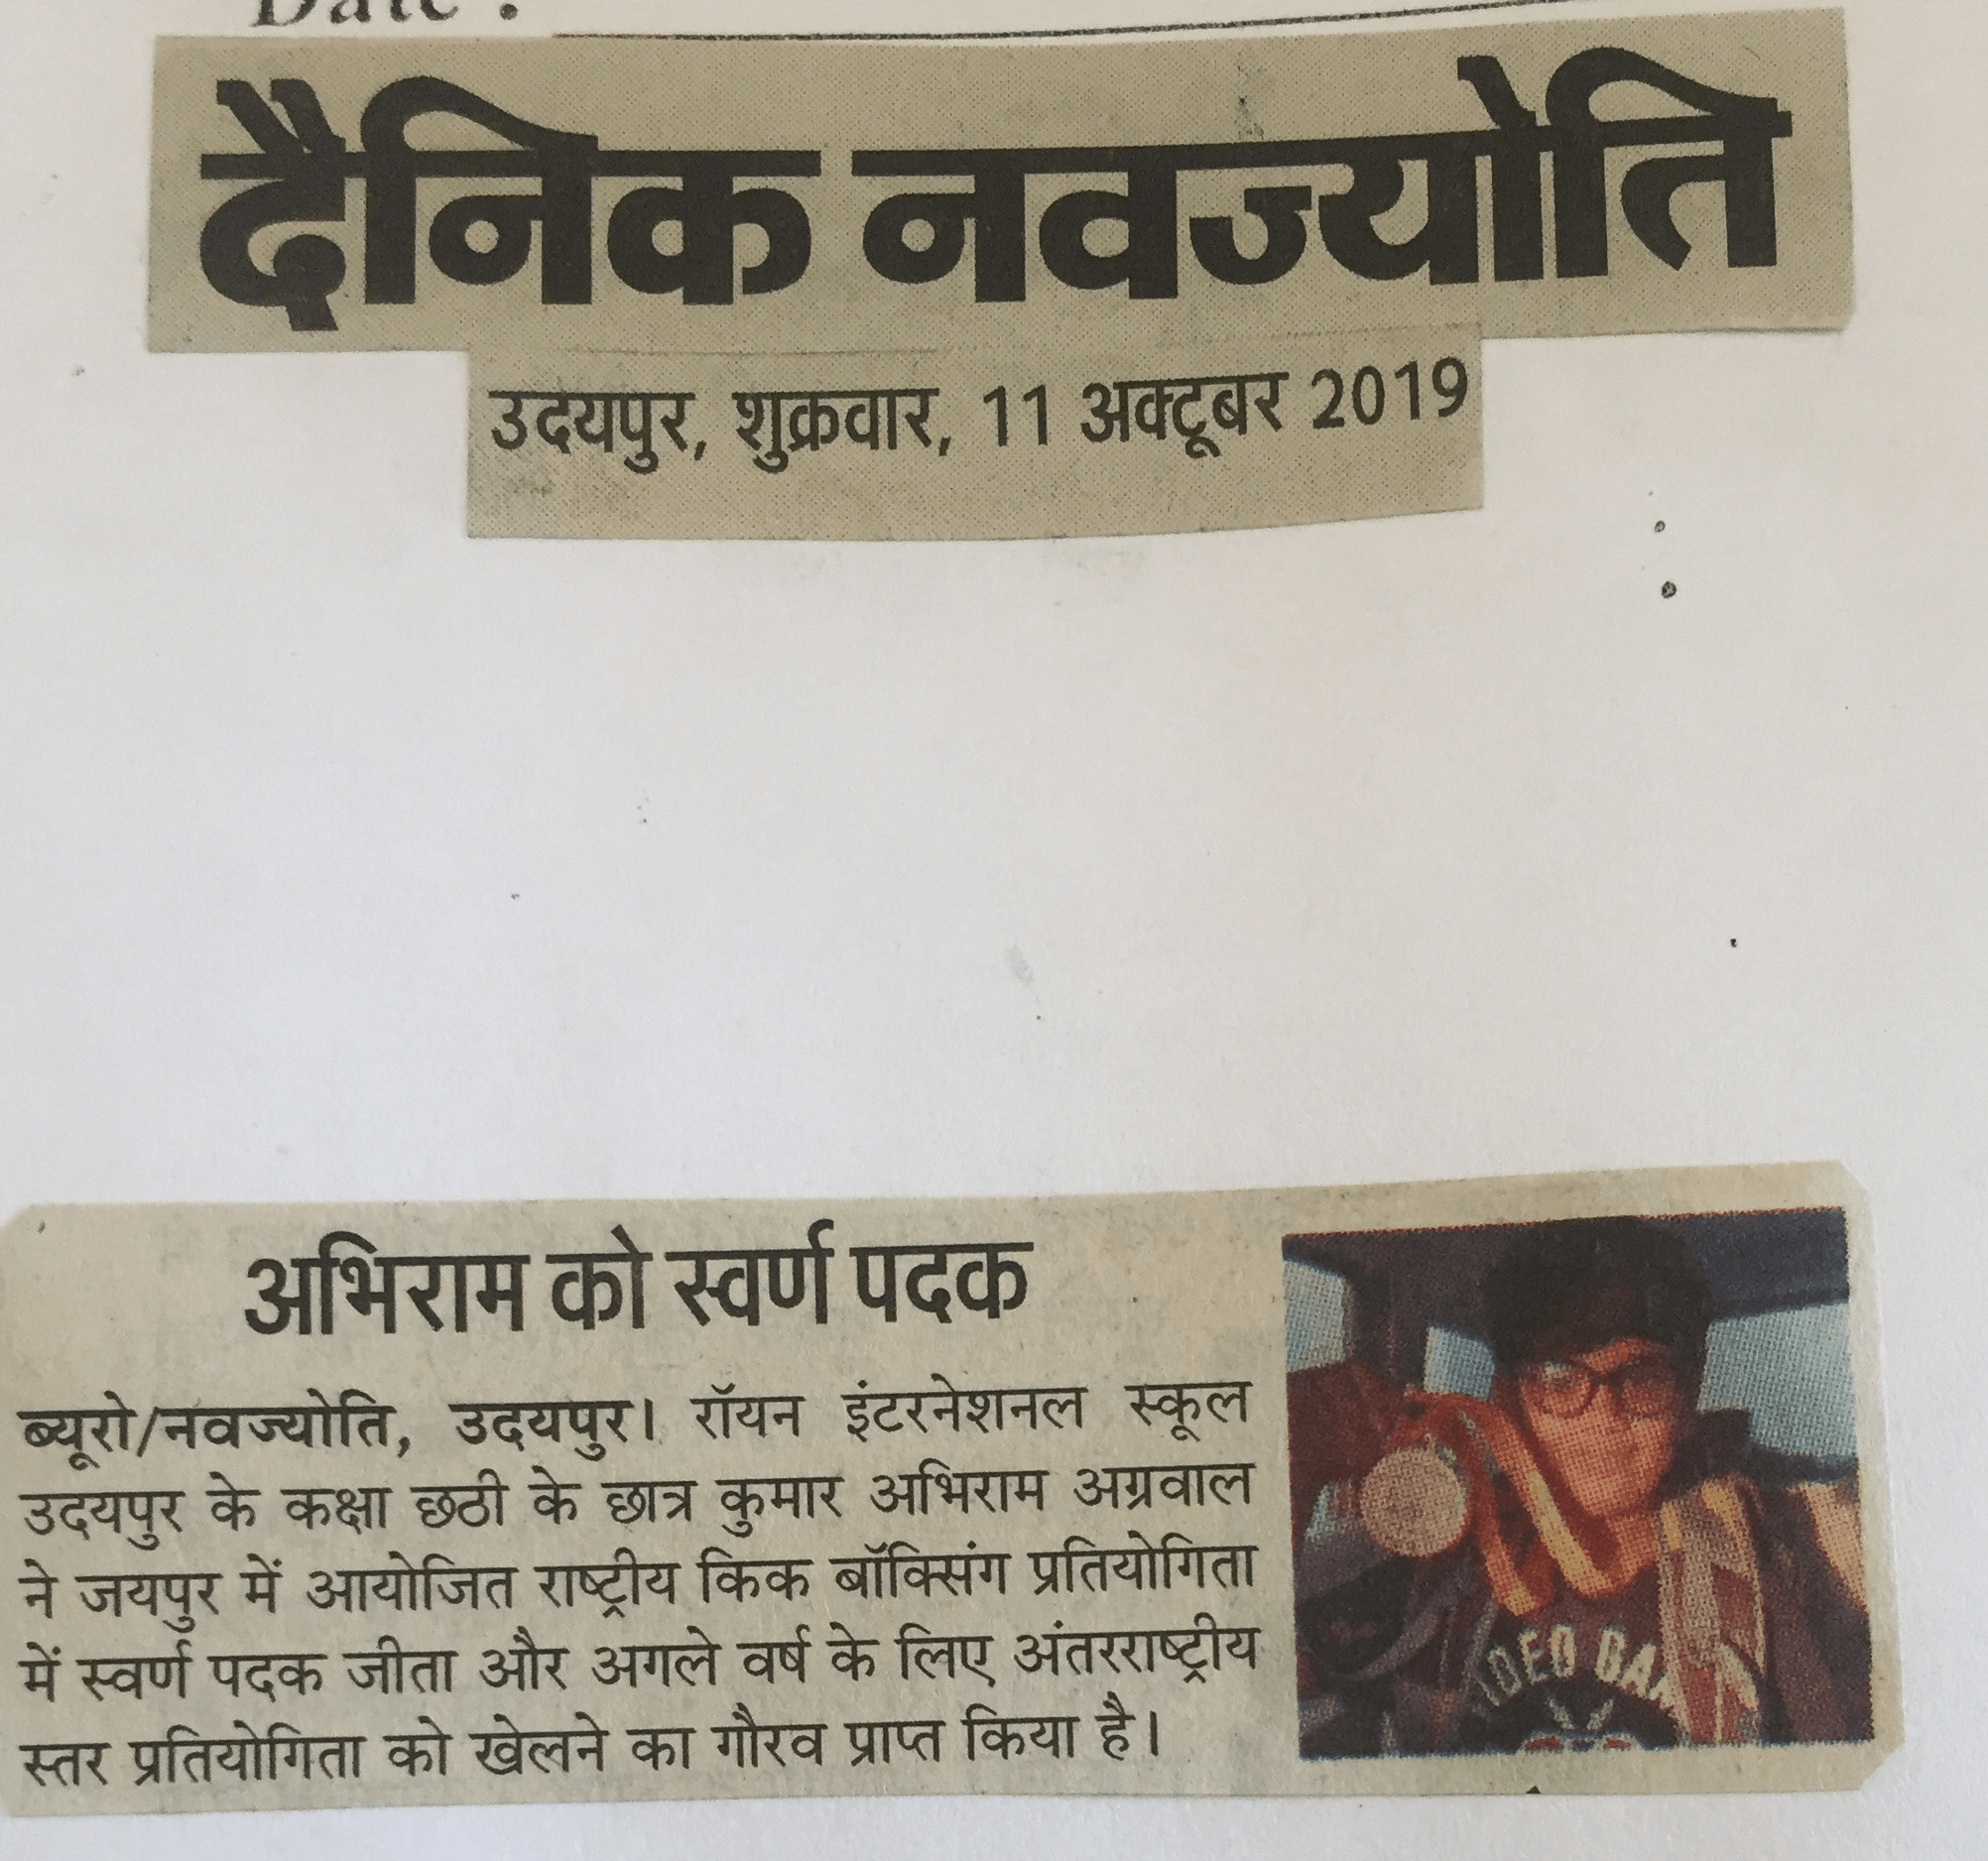 MST. ABHIRAM AGARWAL NATIONAL GOLD ACHIEVEMENT IN KICKBOXING - Ryan international School, Udaipur